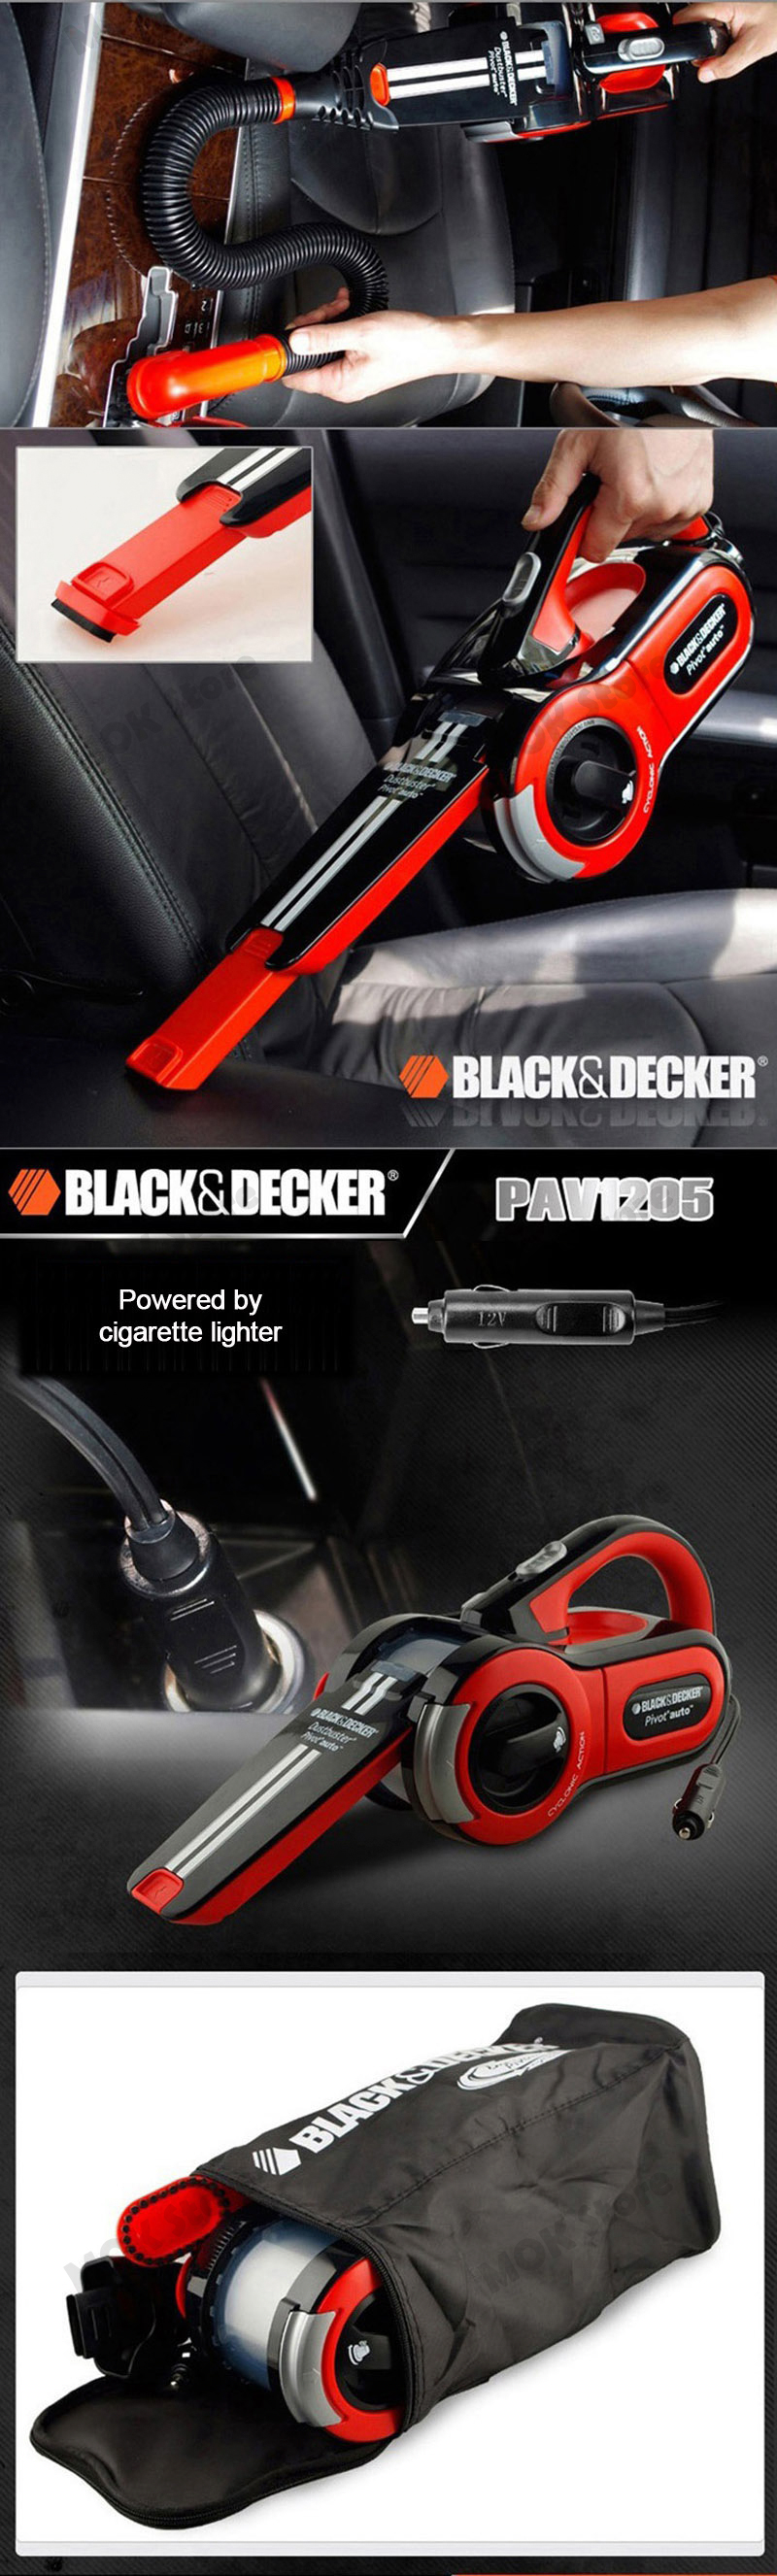 black & decker pivot auto dustbuster review